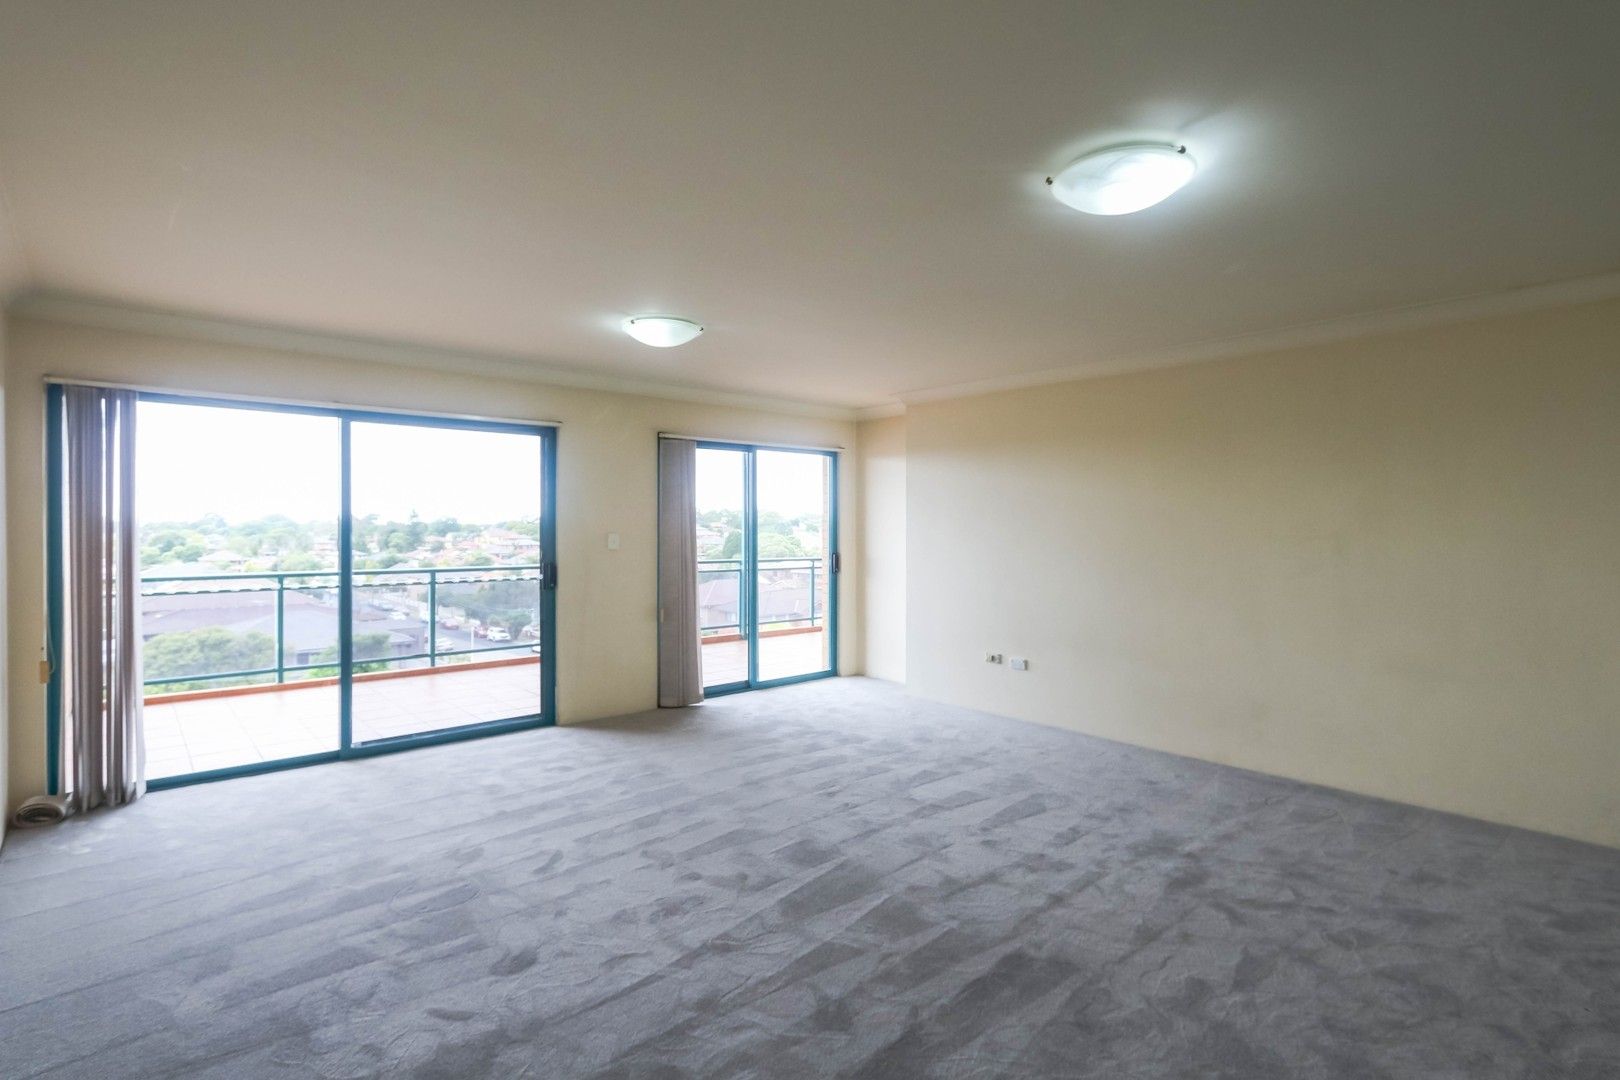 2 bedrooms Apartment / Unit / Flat in 16-22 Burwood Road BURWOOD NSW, 2134